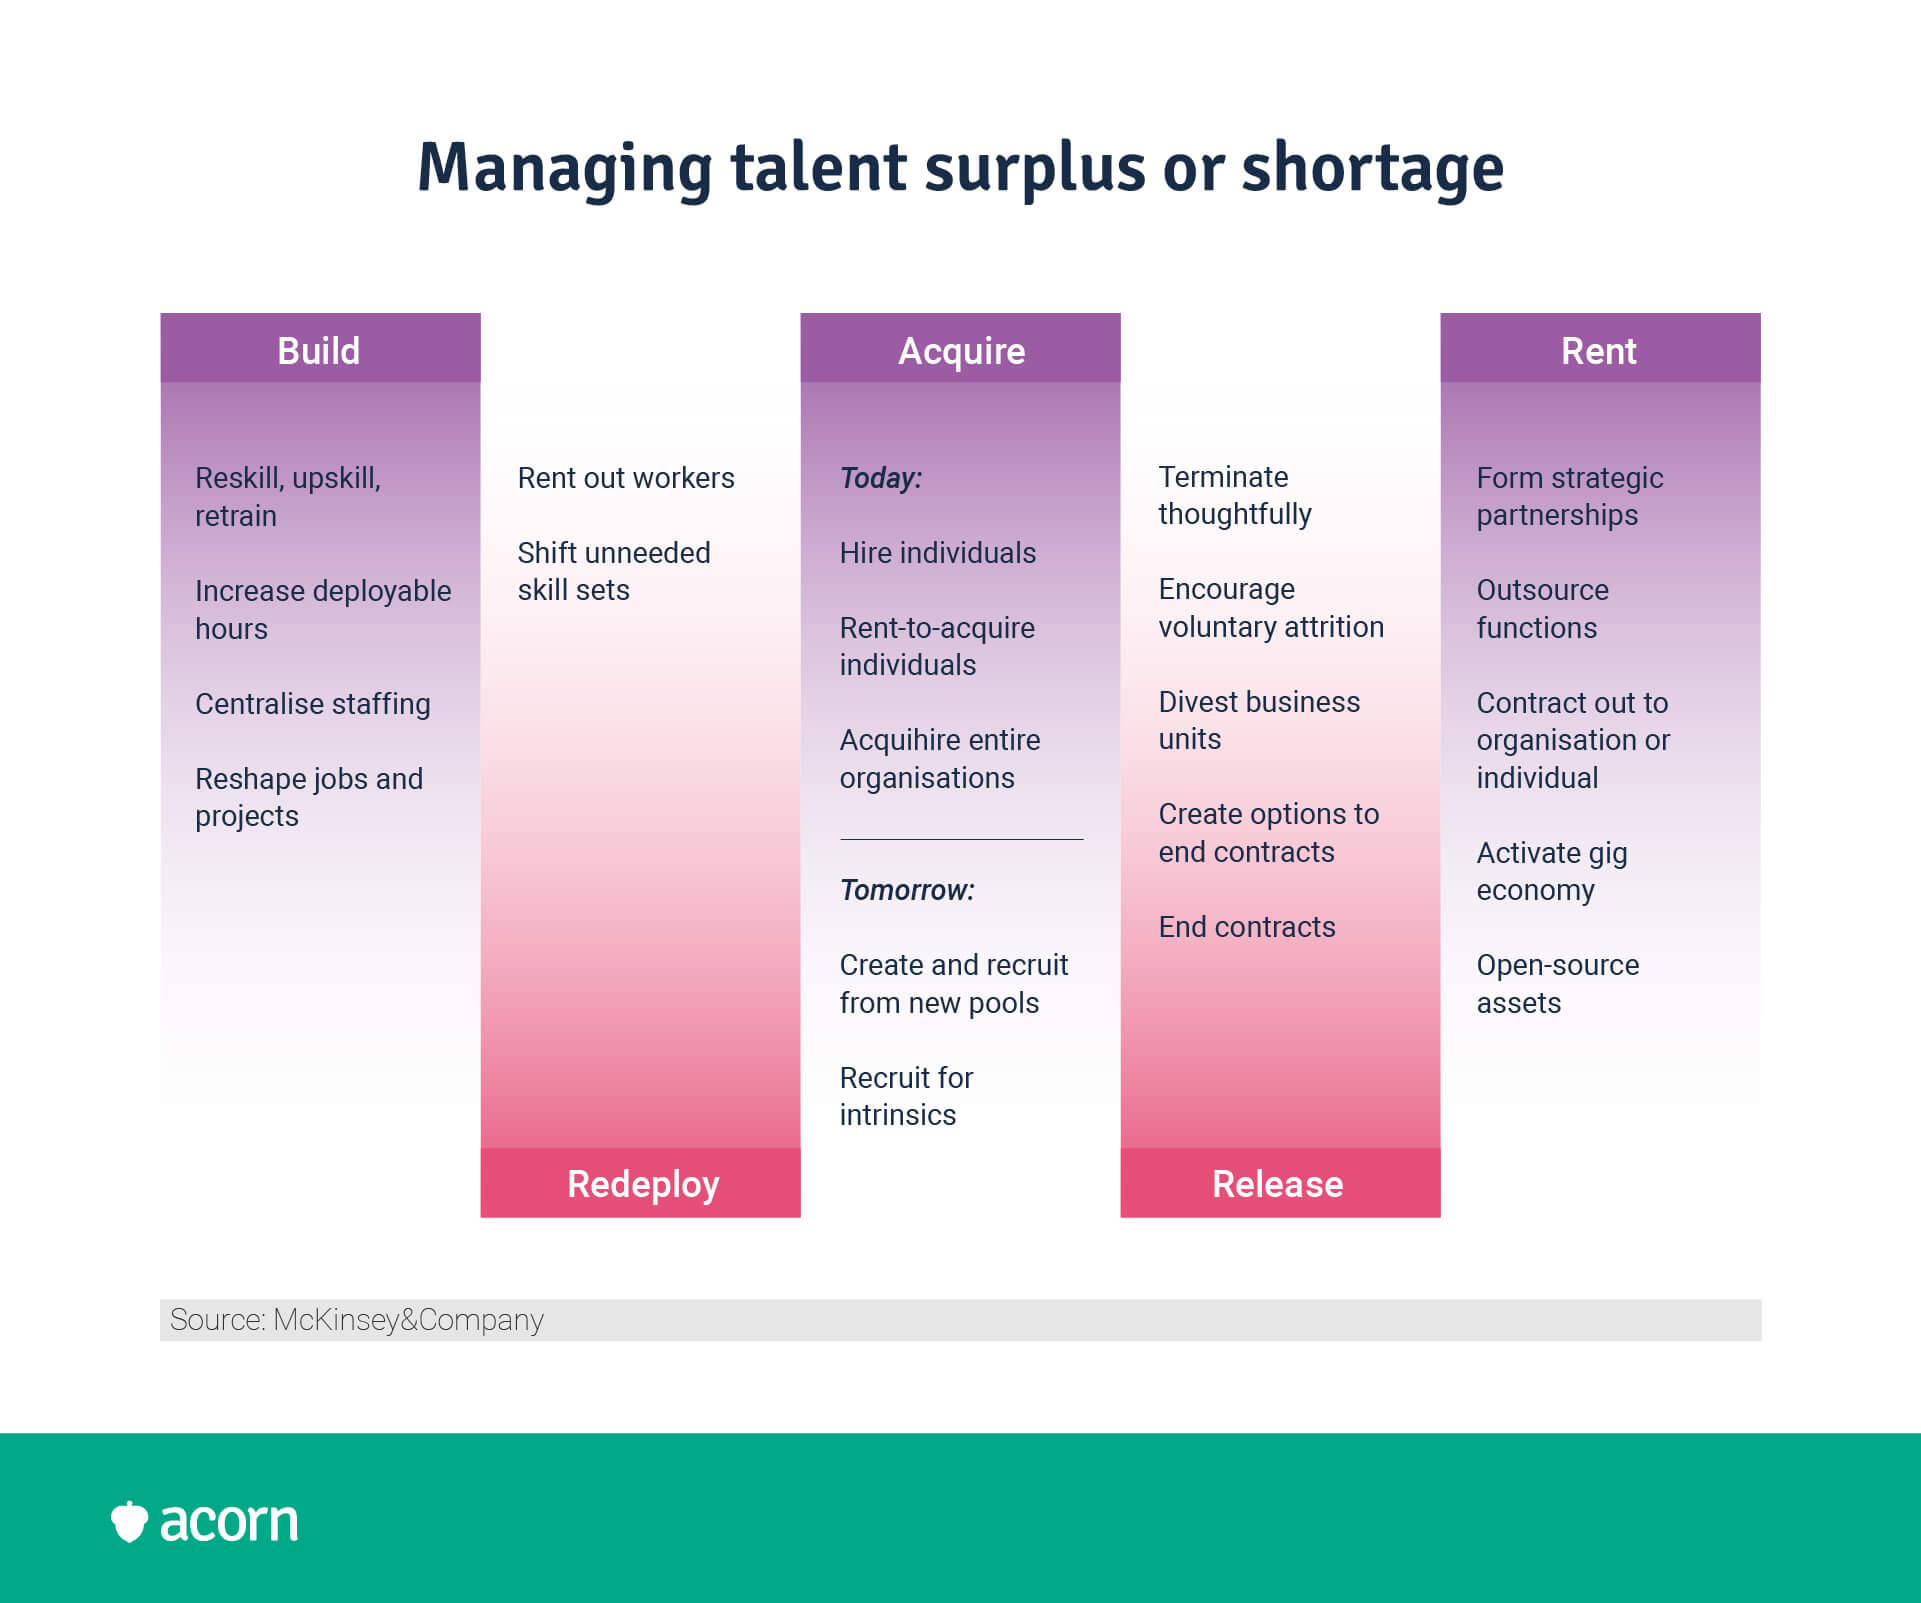 mckinsey's five methods of managing talent surplus or shortage